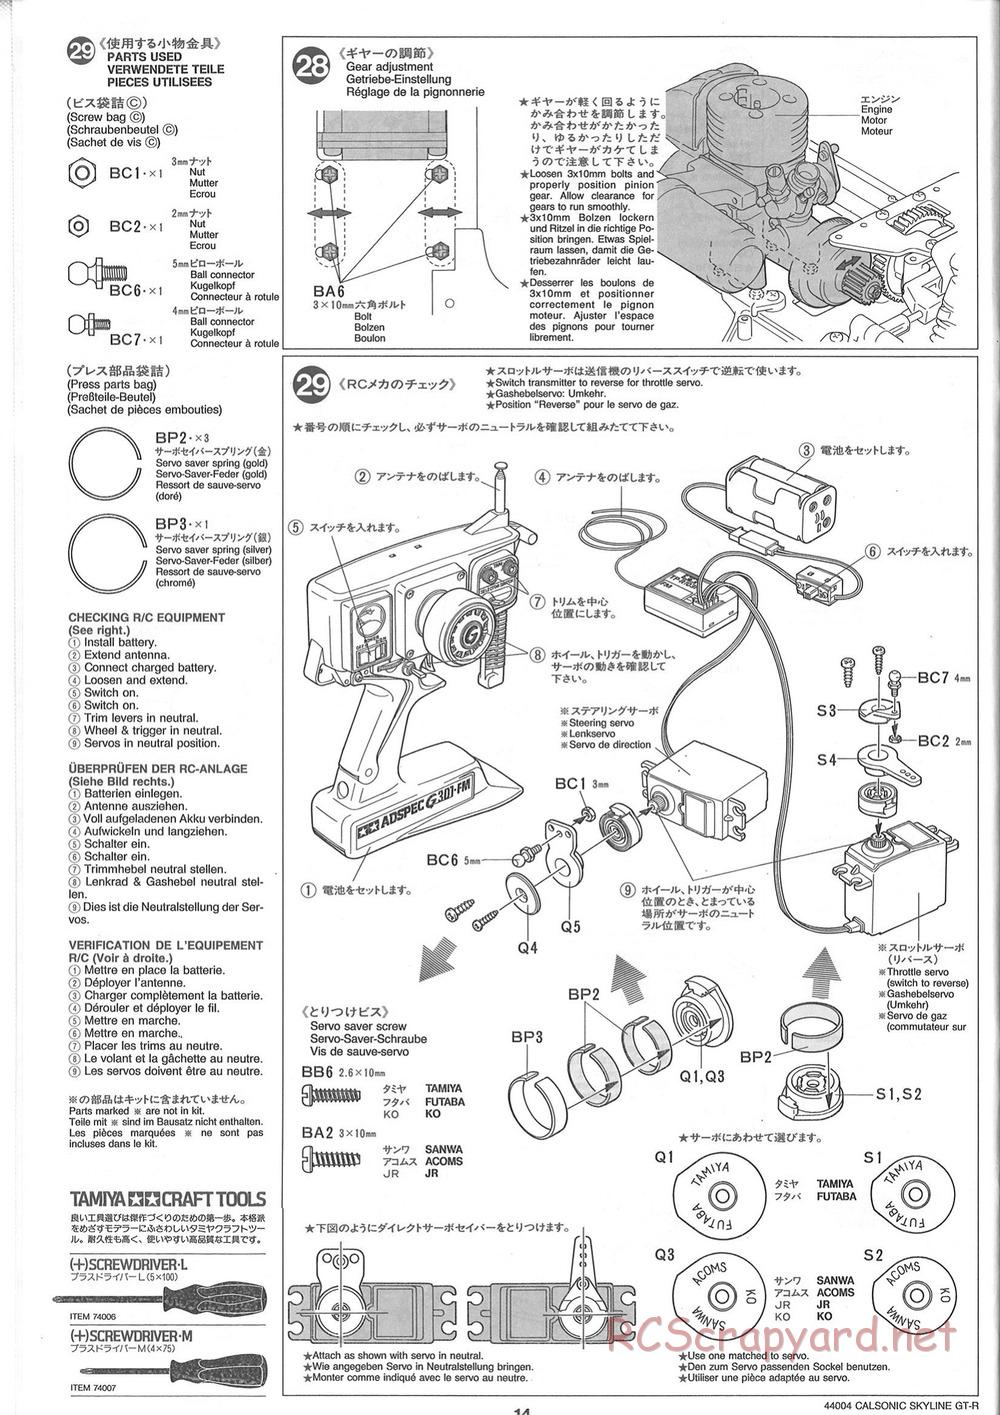 Tamiya - Calsonic GT-R - TGX Mk.1 Chassis - Manual - Page 14